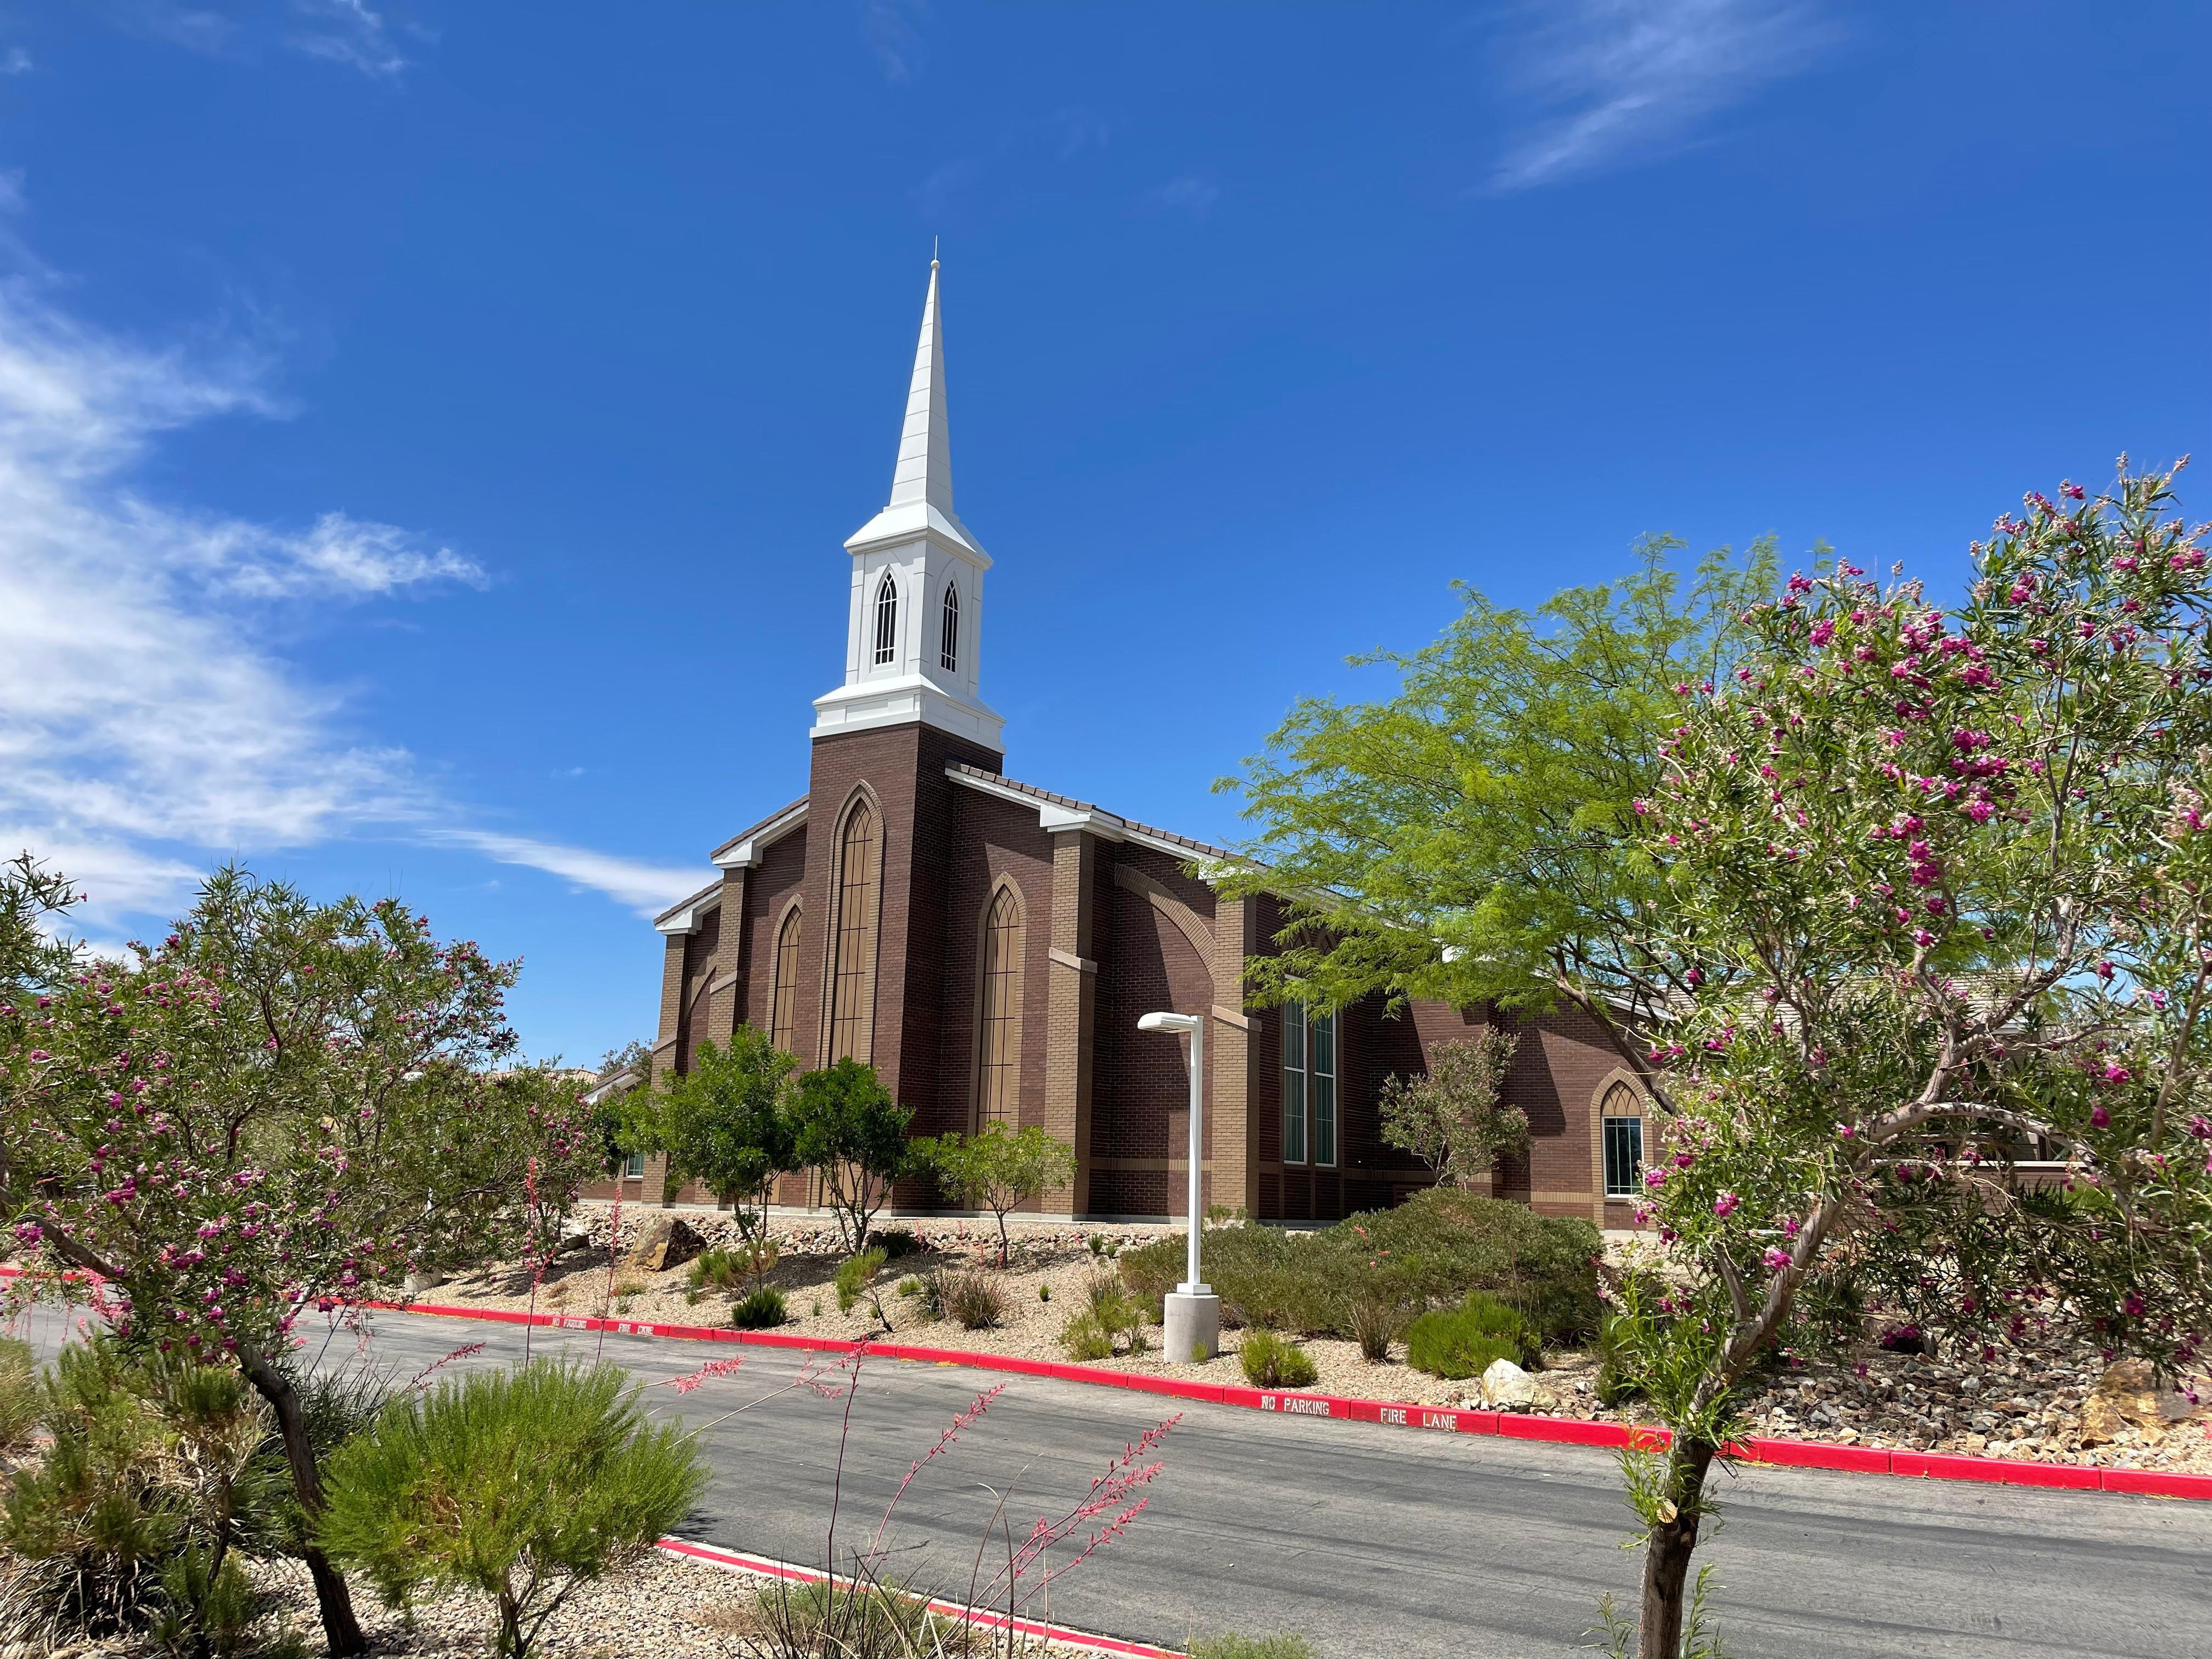 Cimarron Building of the Church of Jesus Christ of Latter-day Saints located at 9485 S Cimarron Road in Las Vegas, Nevada.